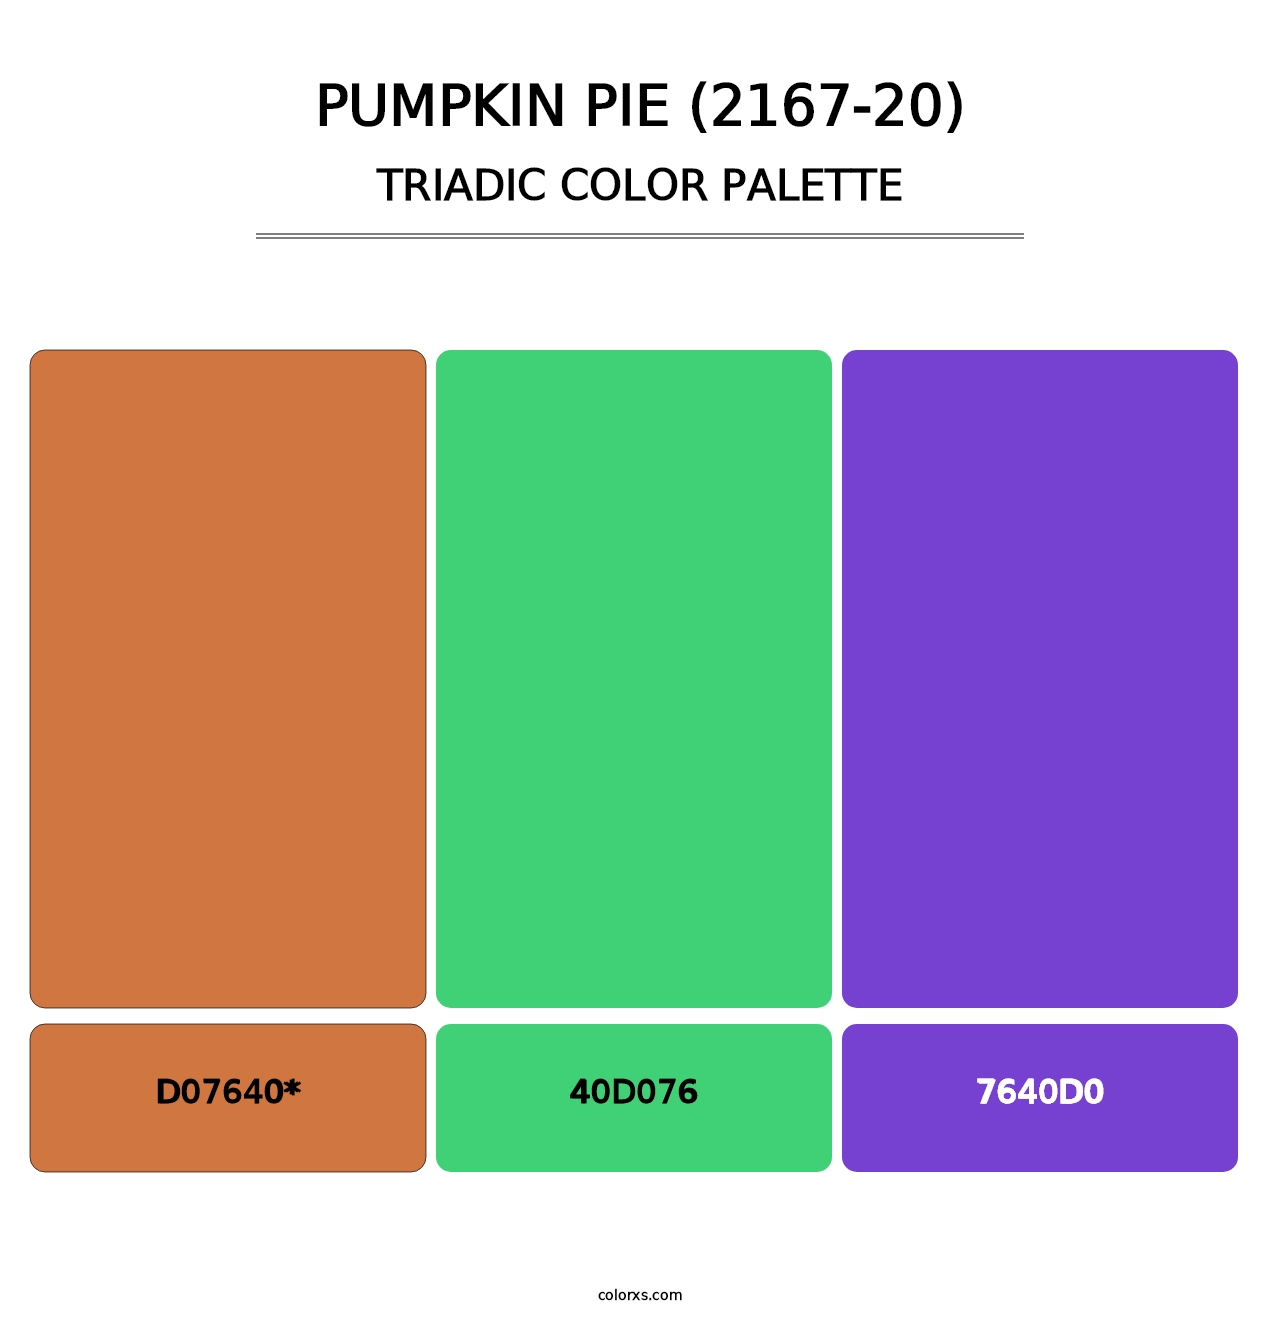 Pumpkin Pie (2167-20) - Triadic Color Palette